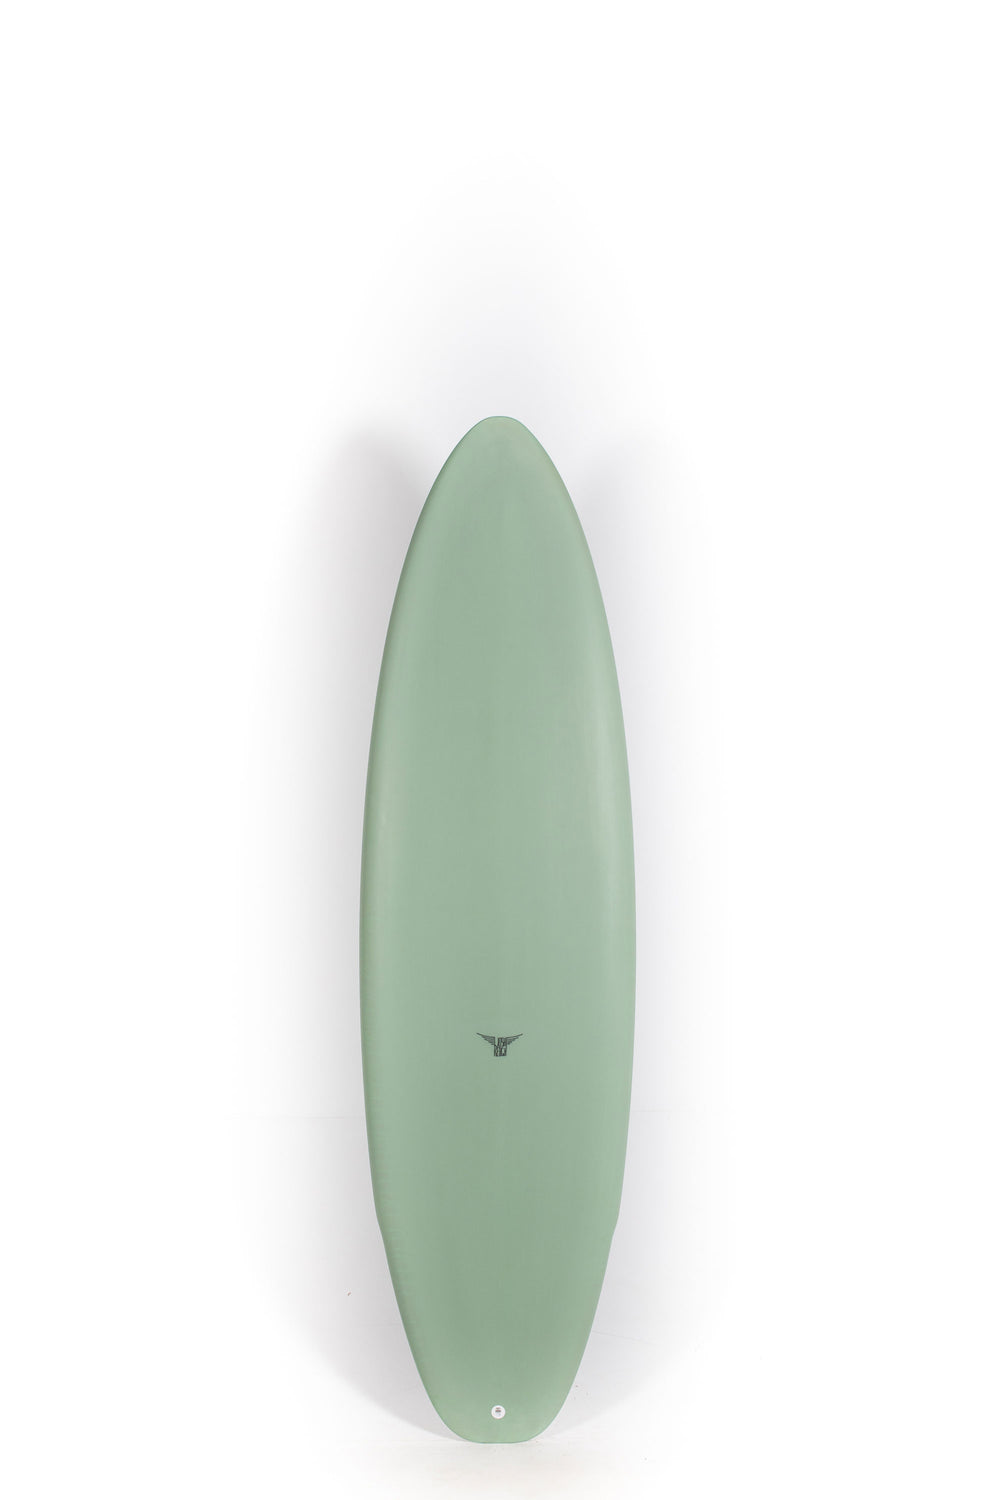 Pukas Surf Shop - Joshua Keogh Surfboard - ASTRONAVEE by Joshua Keogh - 6'8